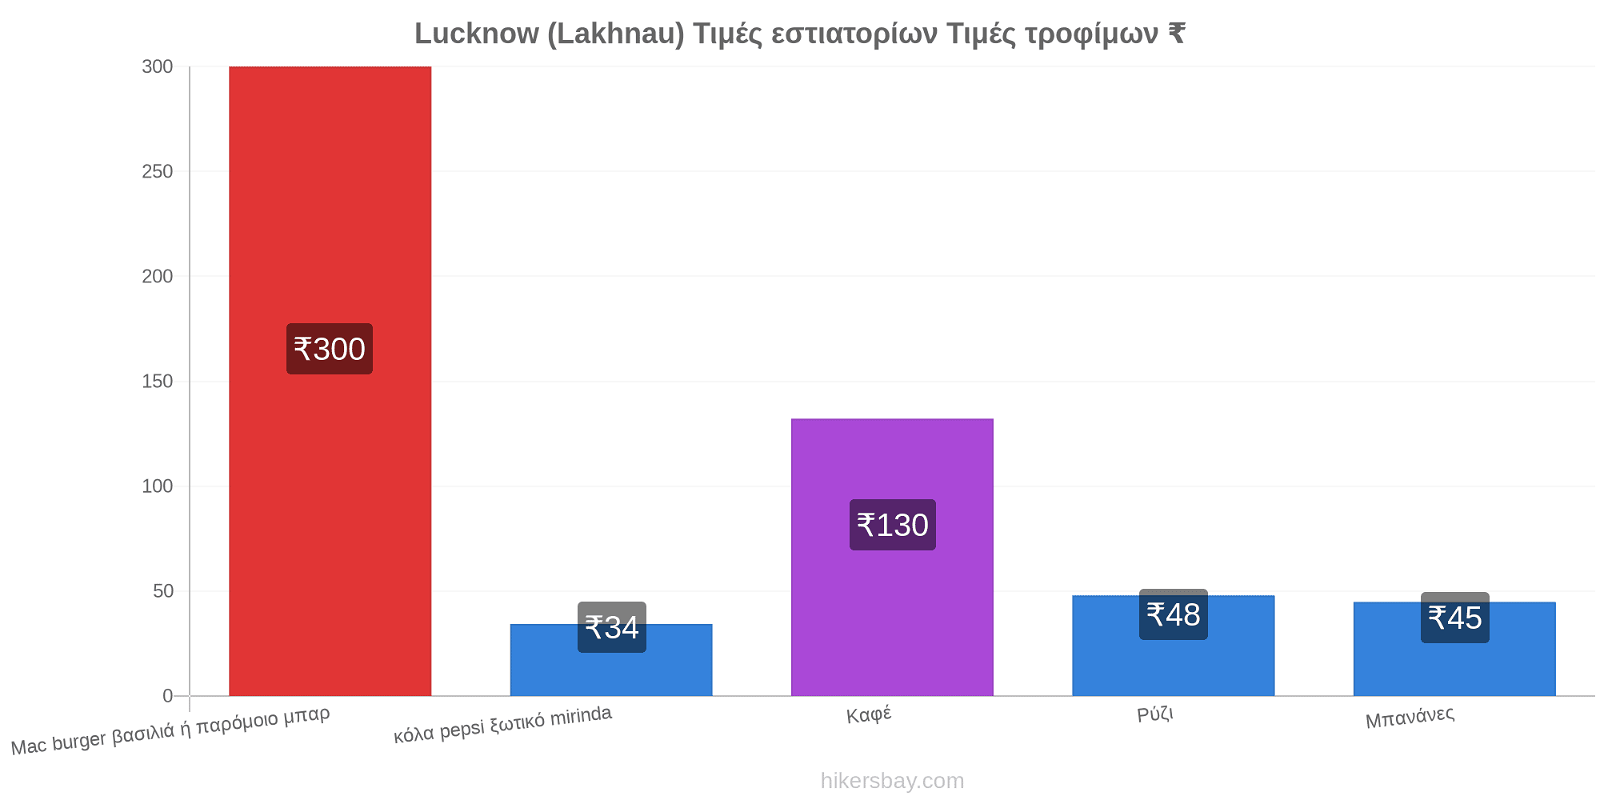 Lucknow (Lakhnau) αλλαγές τιμών hikersbay.com